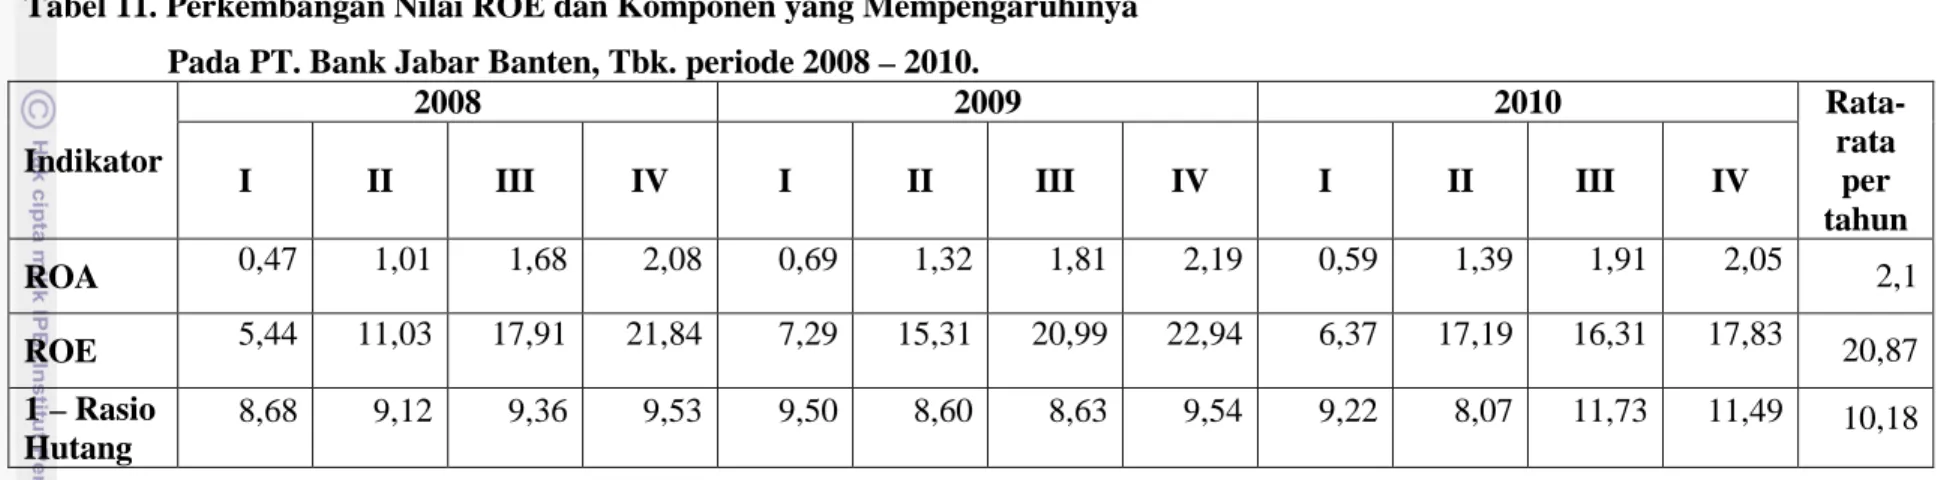 Tabel 11. Perkembangan Nilai ROE dan Komponen yang Mempengaruhinya Pada PT. Bank Jabar Banten, Tbk